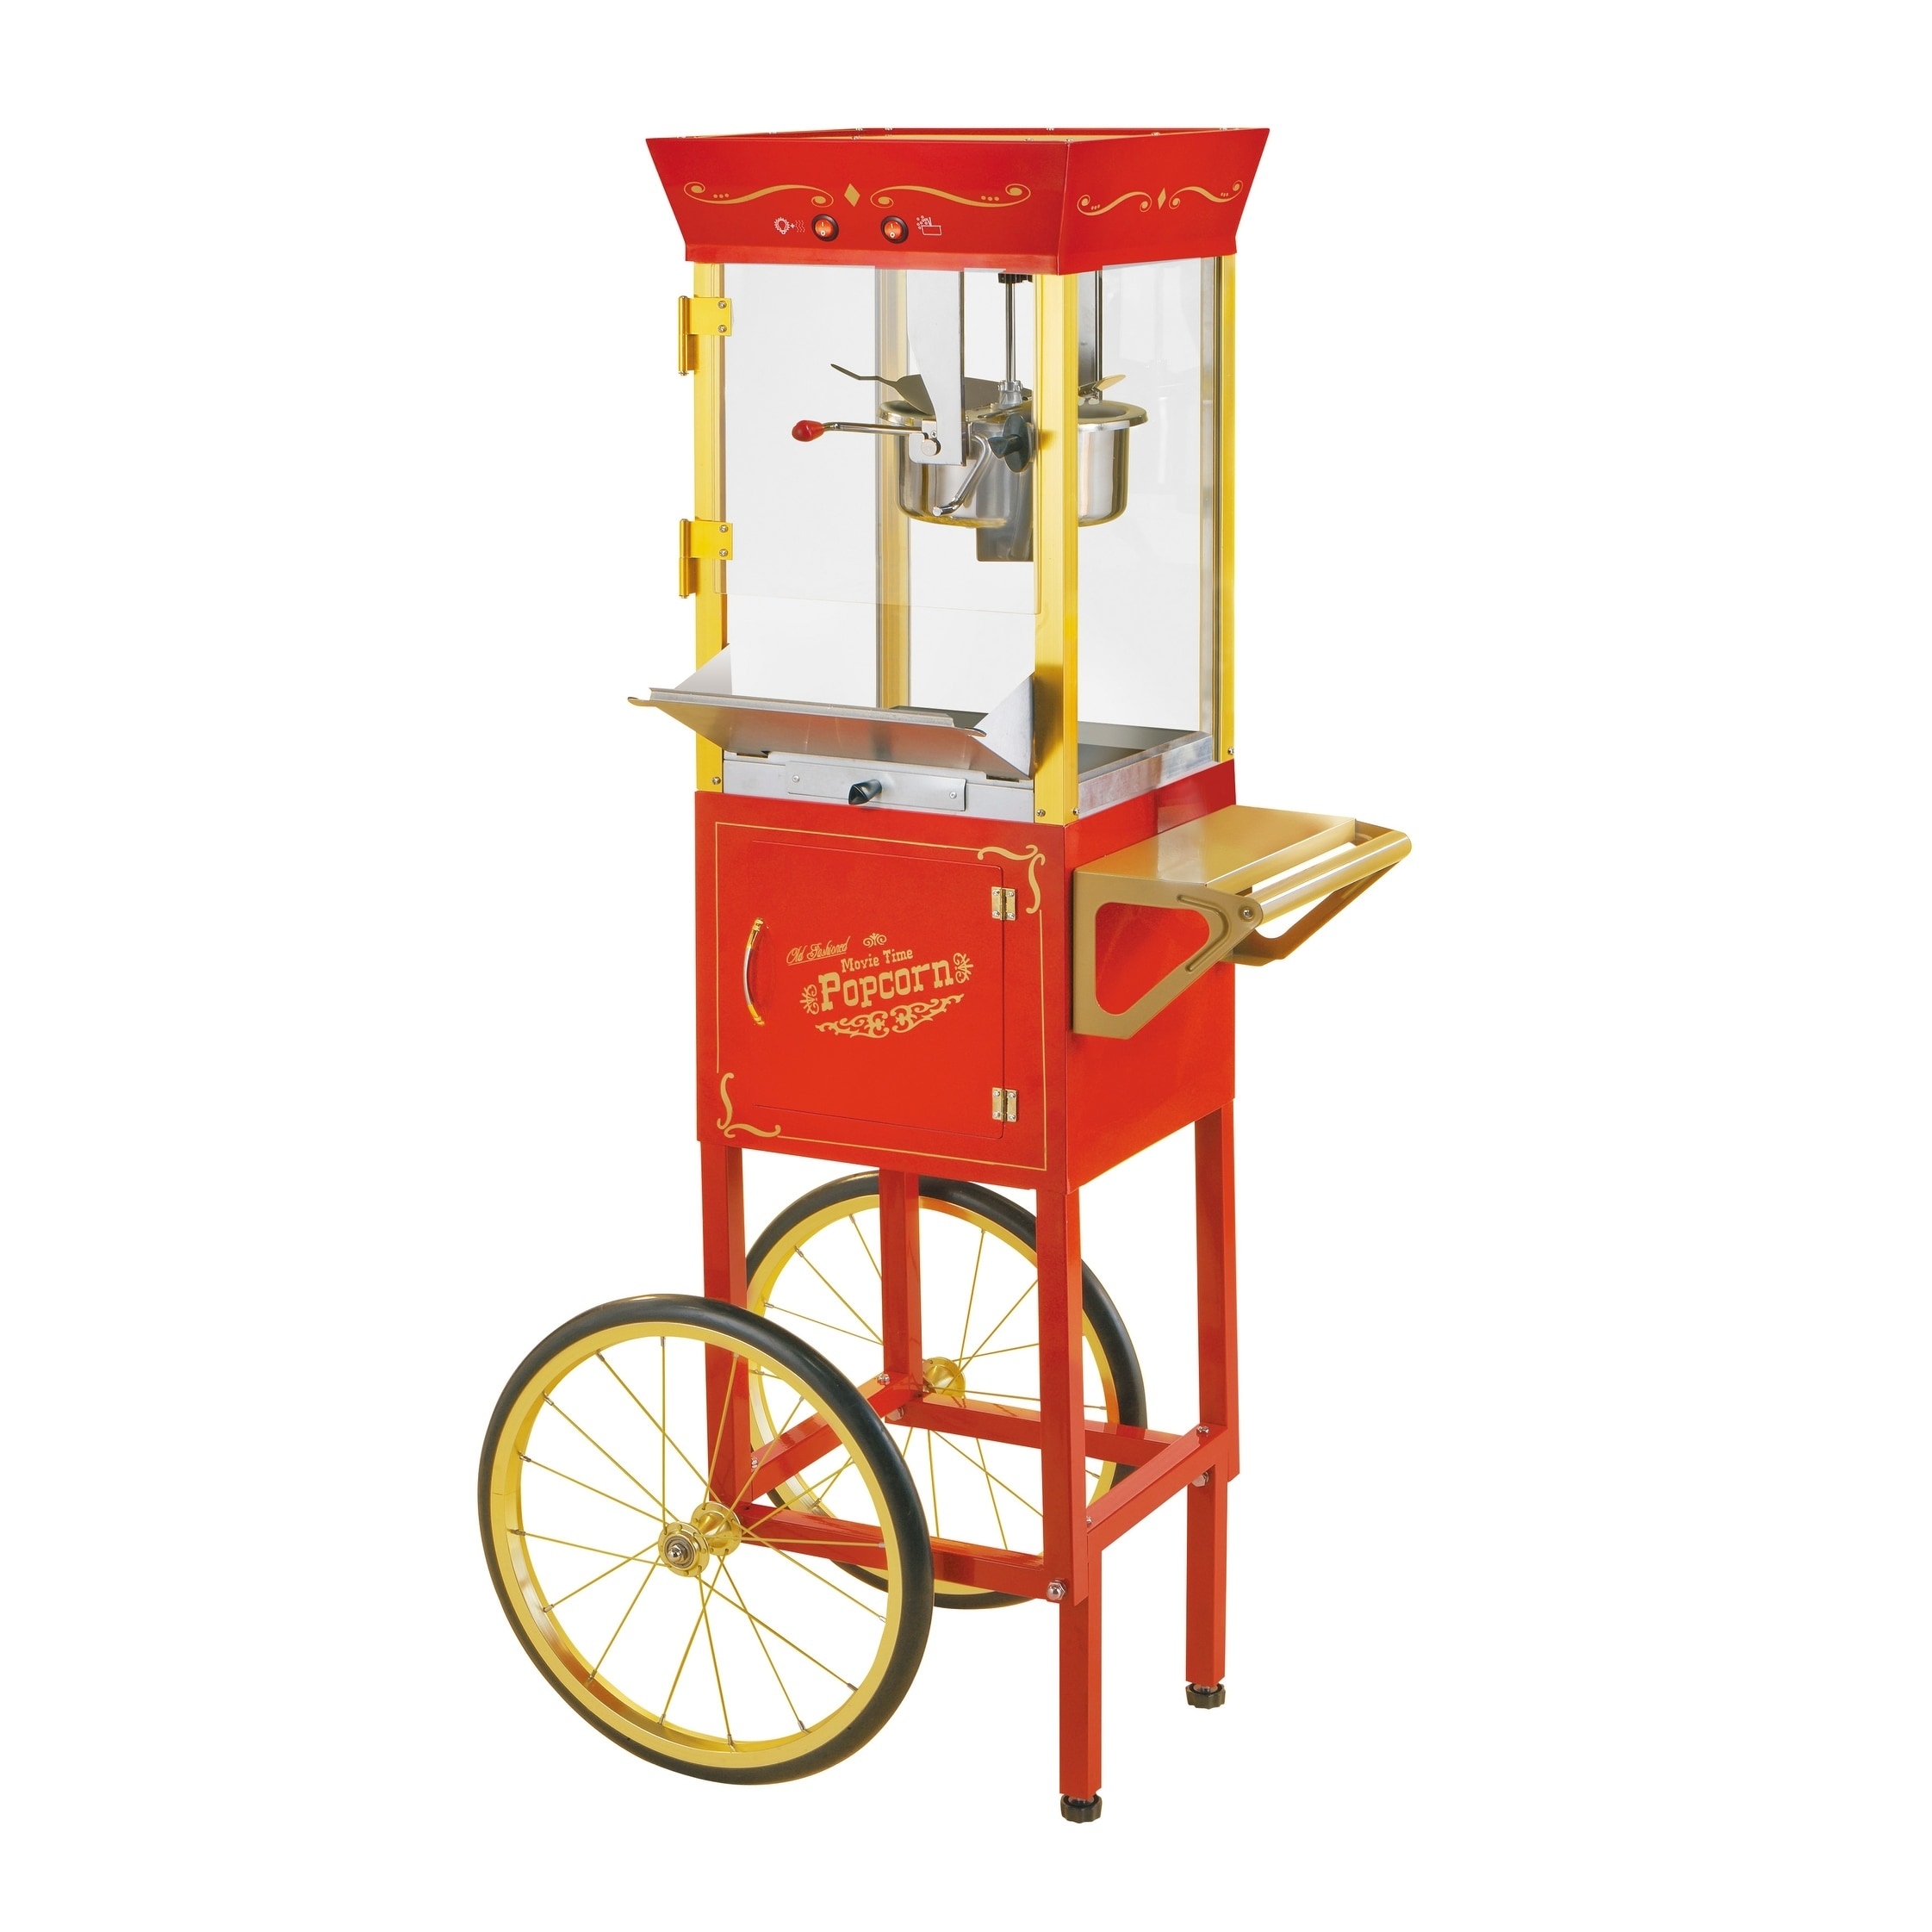 Superior Popcorn Company Movie Night Popcorn Popper Machine with Cart (8 oz, Red)